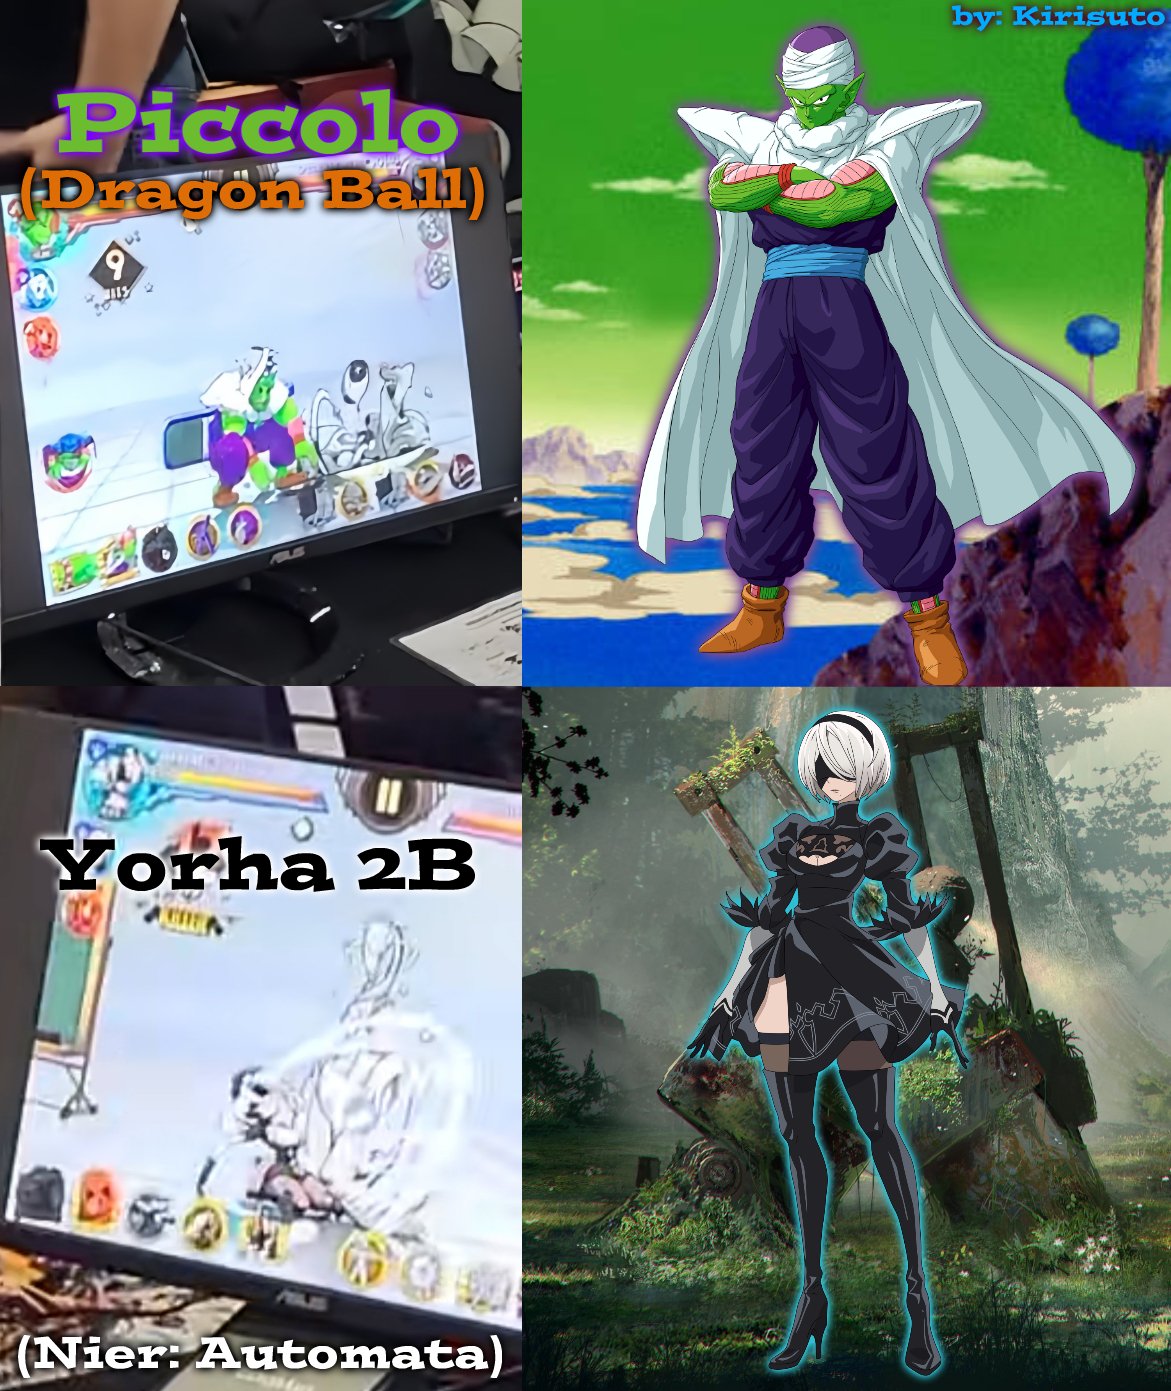 Piccolo (Dragon Ball) 3 S Yorha 2B (Nier: Automata) by: Kirisuto